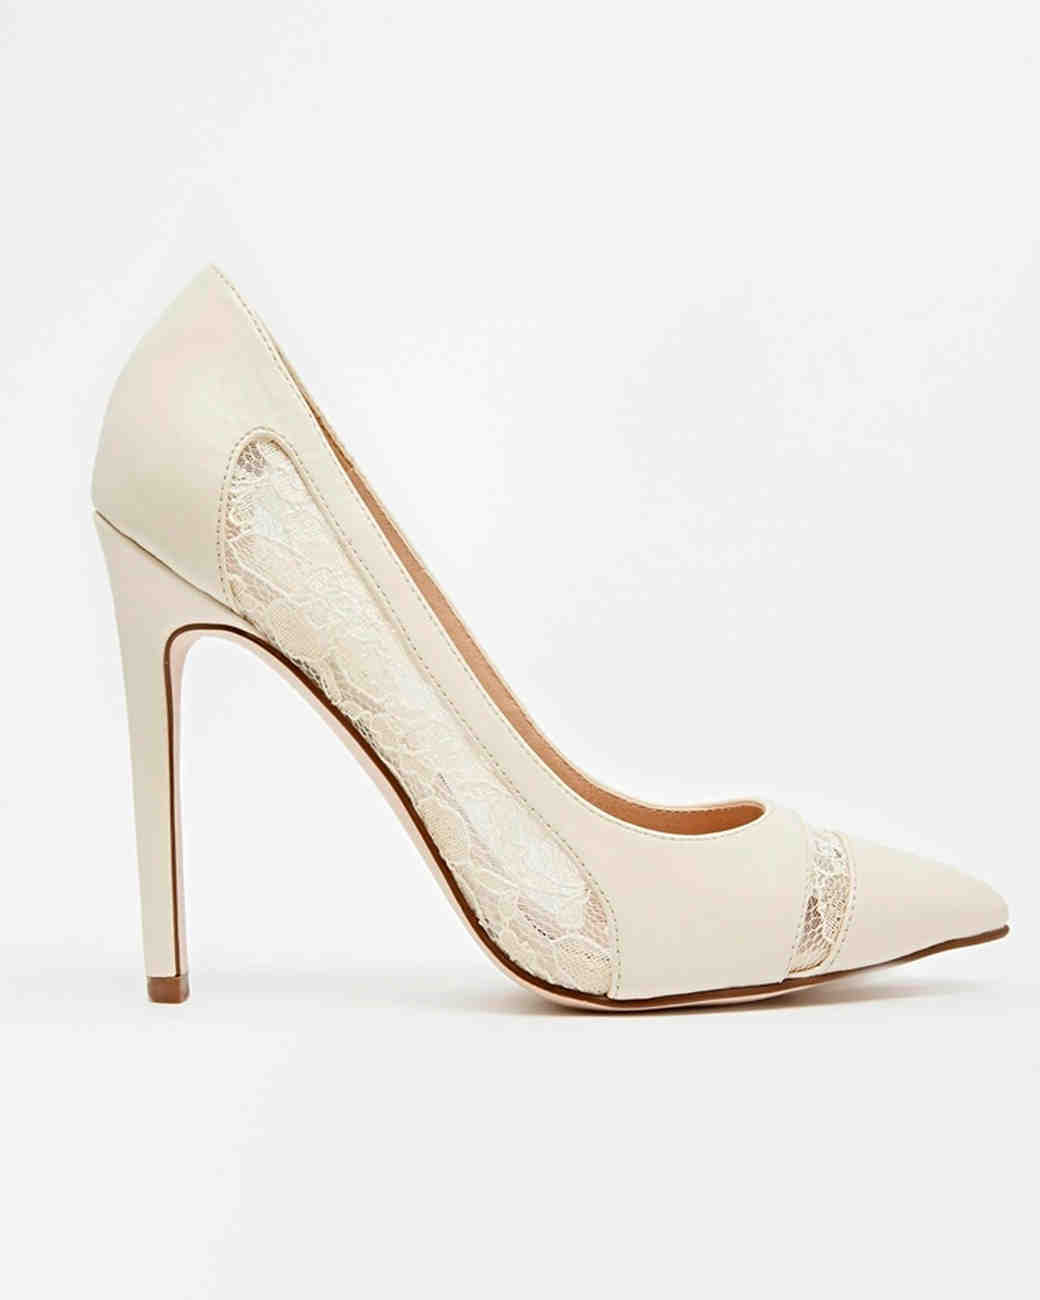 50 Best Shoes for a Bride to Wear to a Summer Wedding | Martha Stewart ...